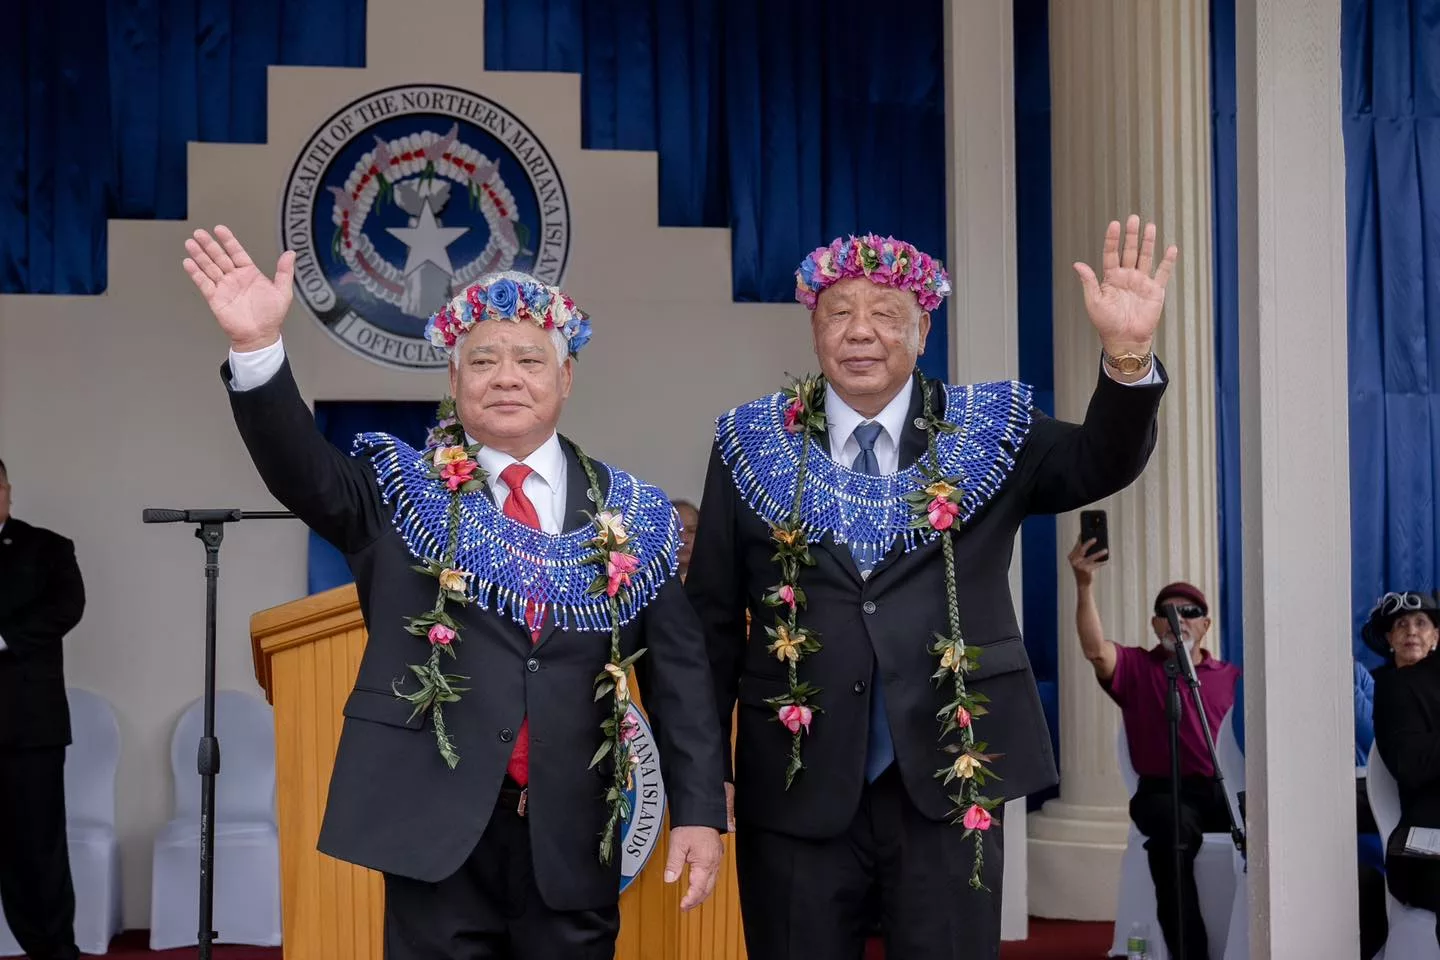 Northern Mariana Islands Governor Arnold Palacios inaugurated